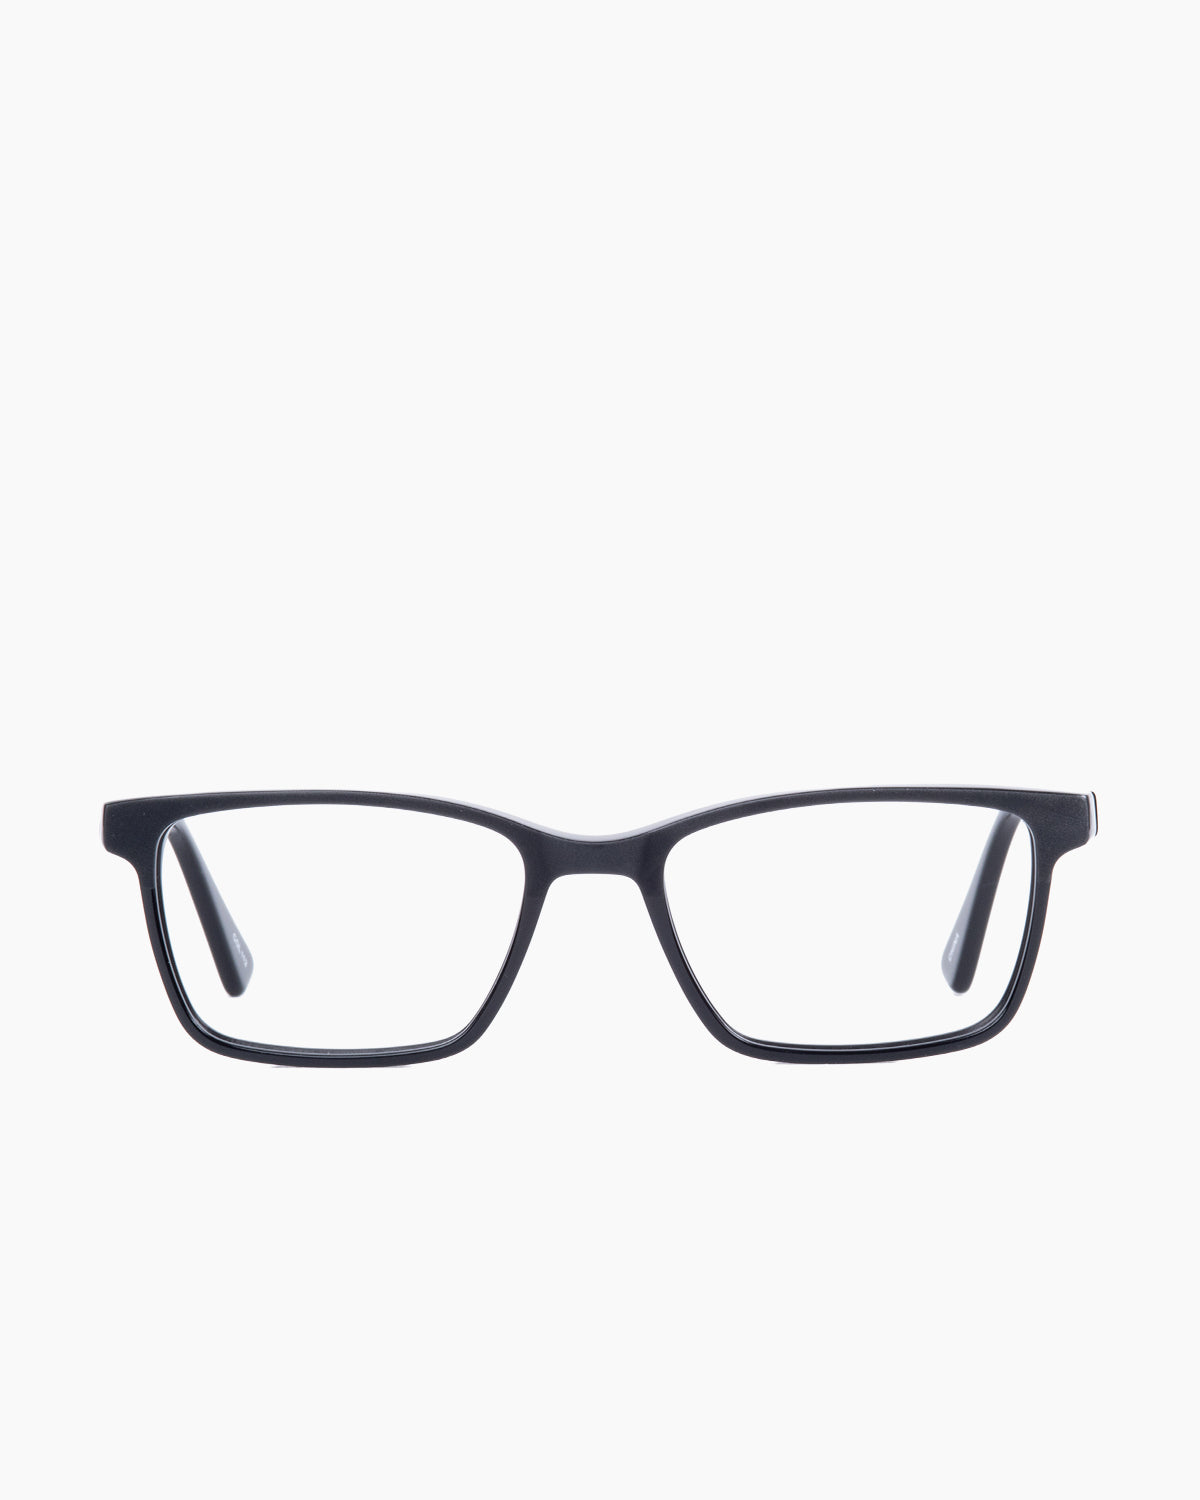 Evolve - Garfield - 112 | glasses bar:  Marie-Sophie Dion